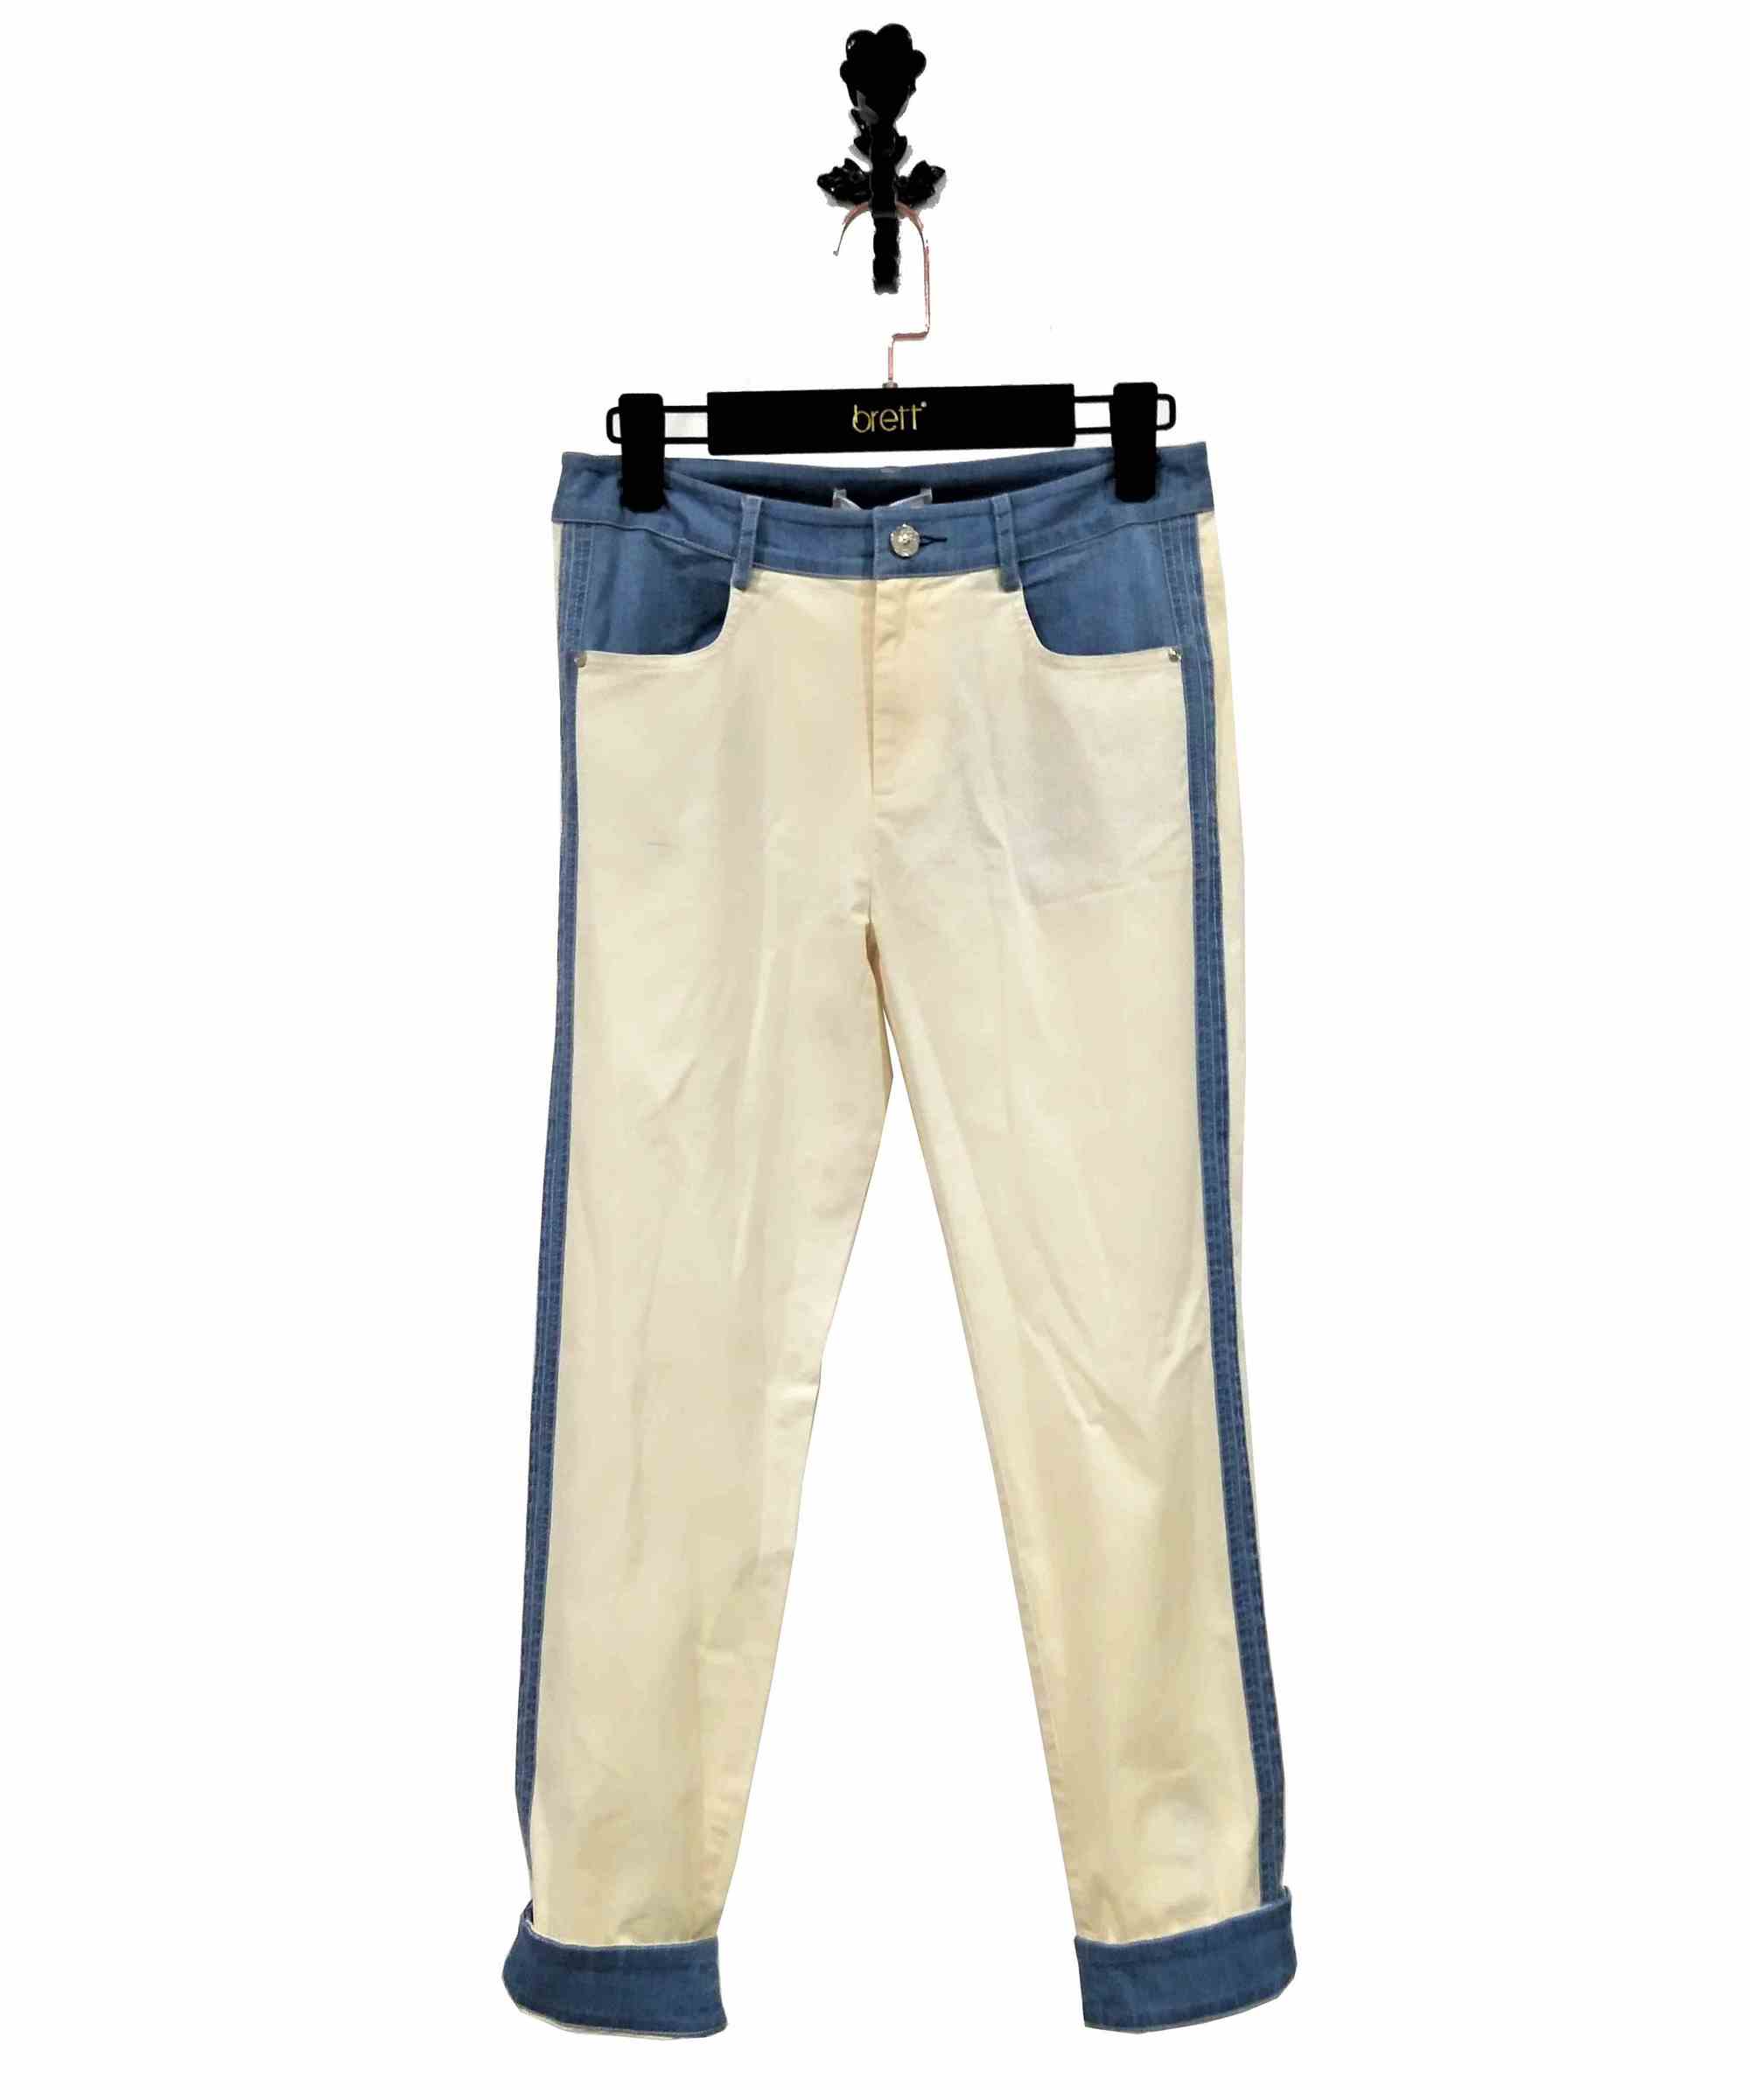 E63299XD-修身雙色雙層流行褲腳反摺牛仔褲-成衣代工 (1).jpg